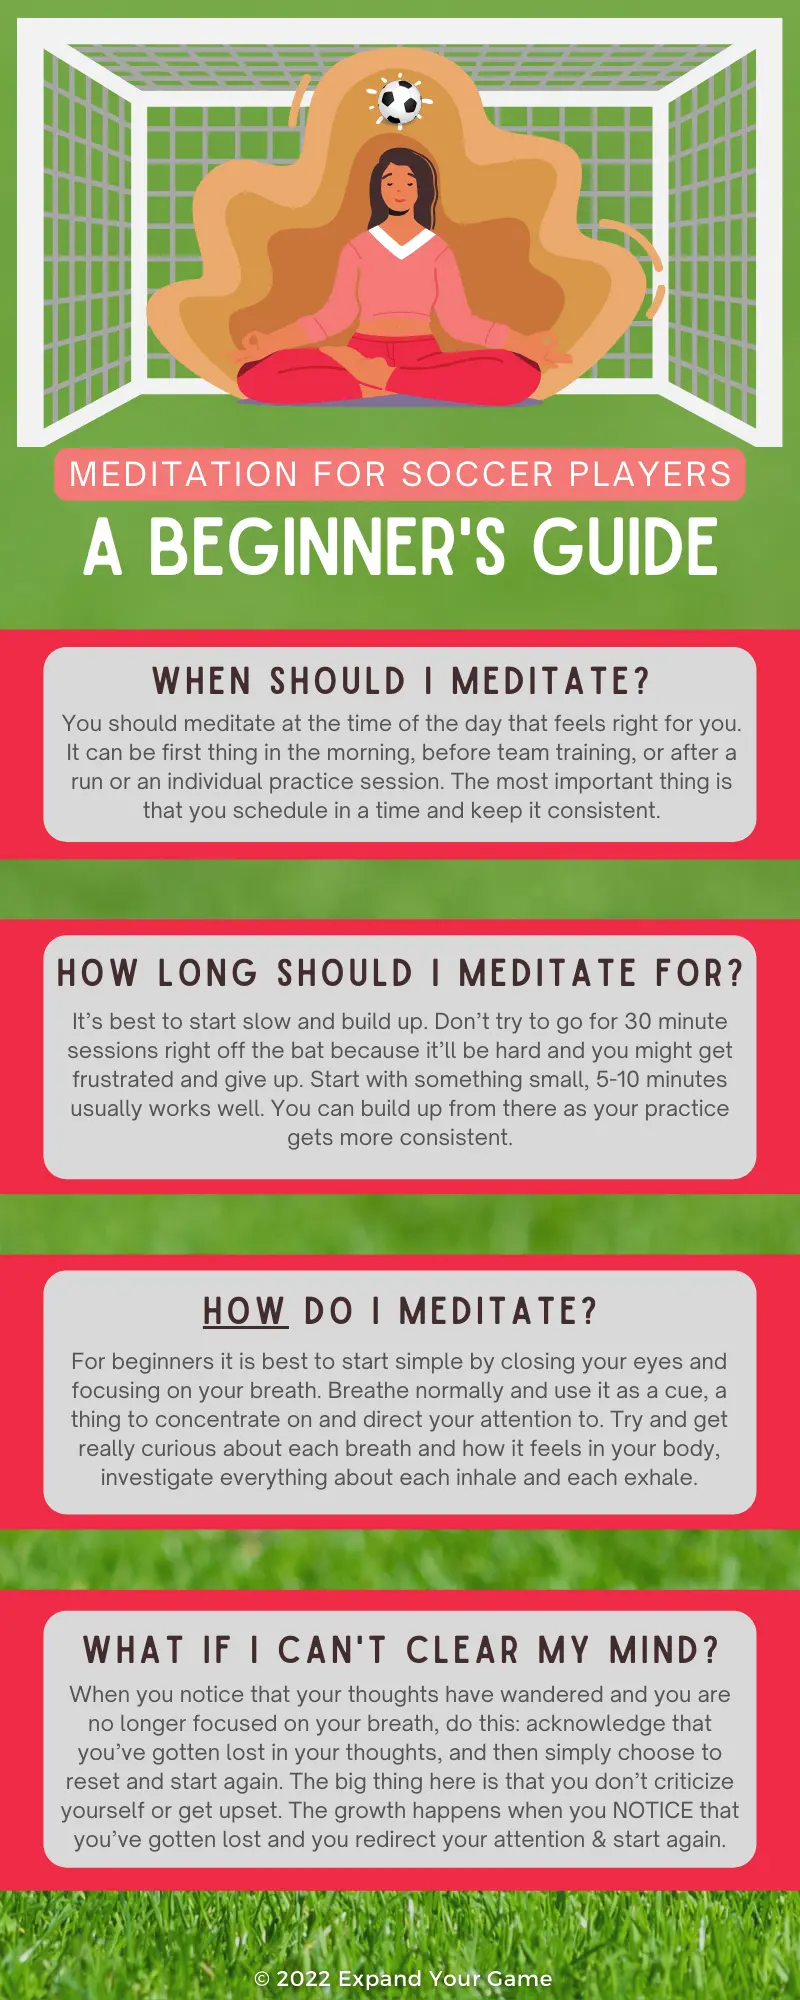 Meditation for soccer players: a beginner's guide